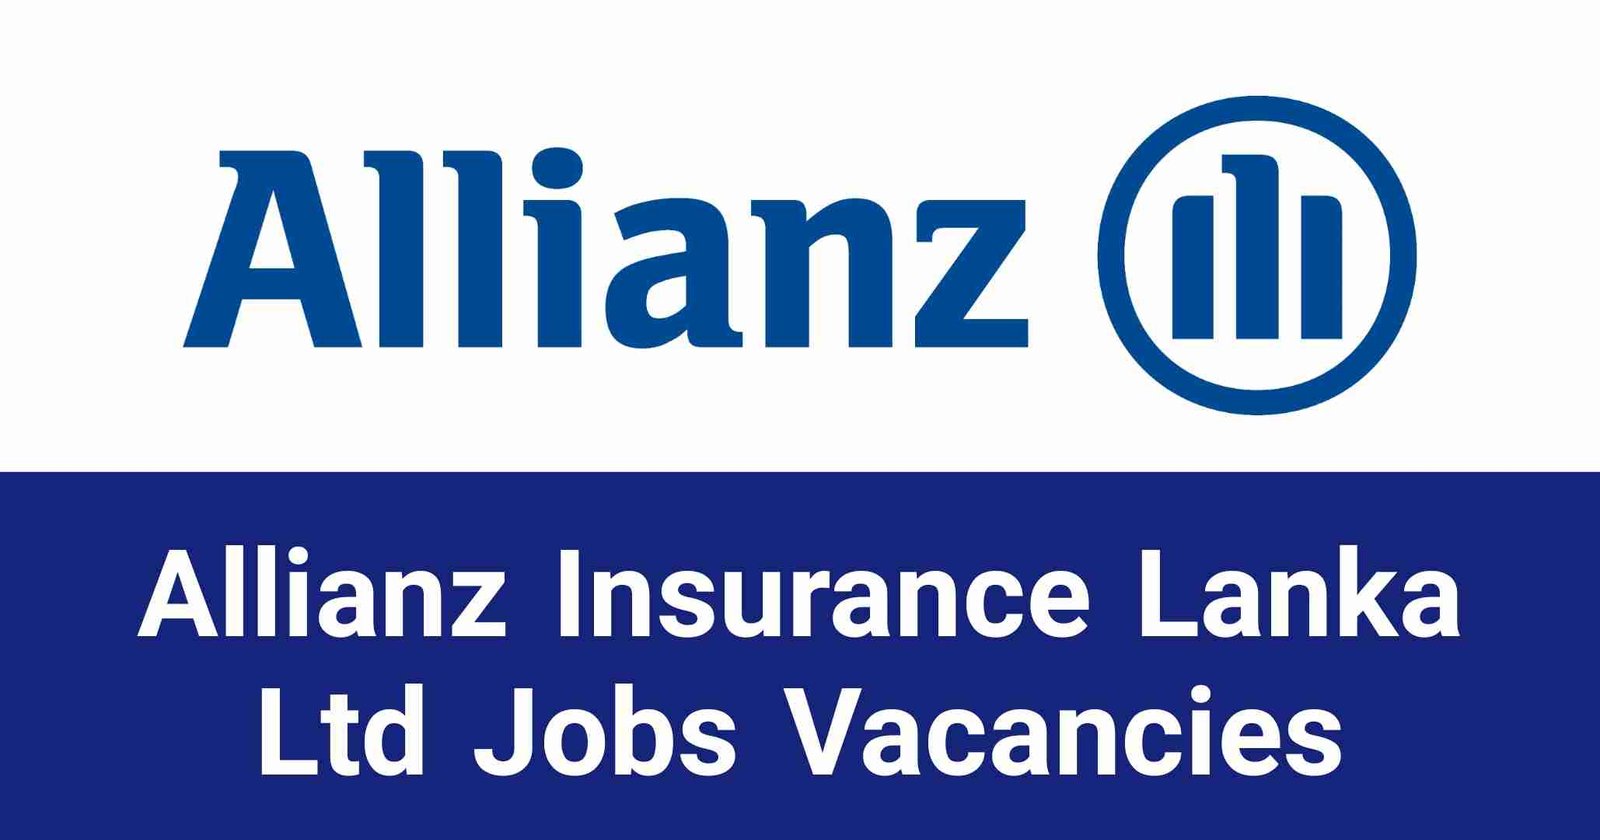 Allianz Insurance Lanka Ltd Jobs Vacancies